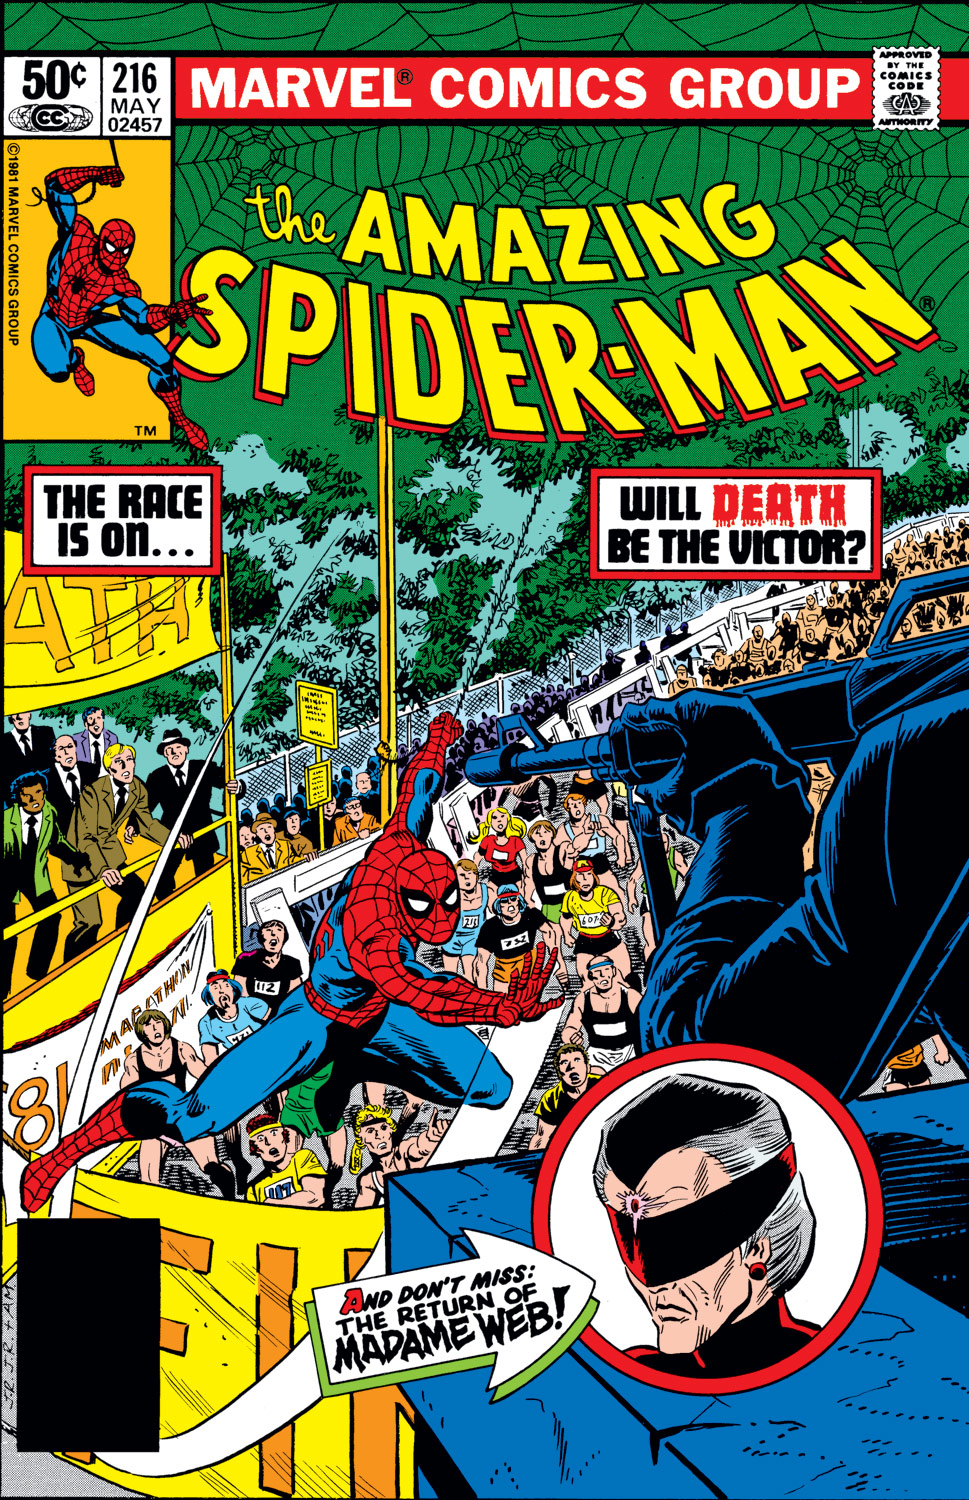 The Amazing Spider-Man (1963) #216